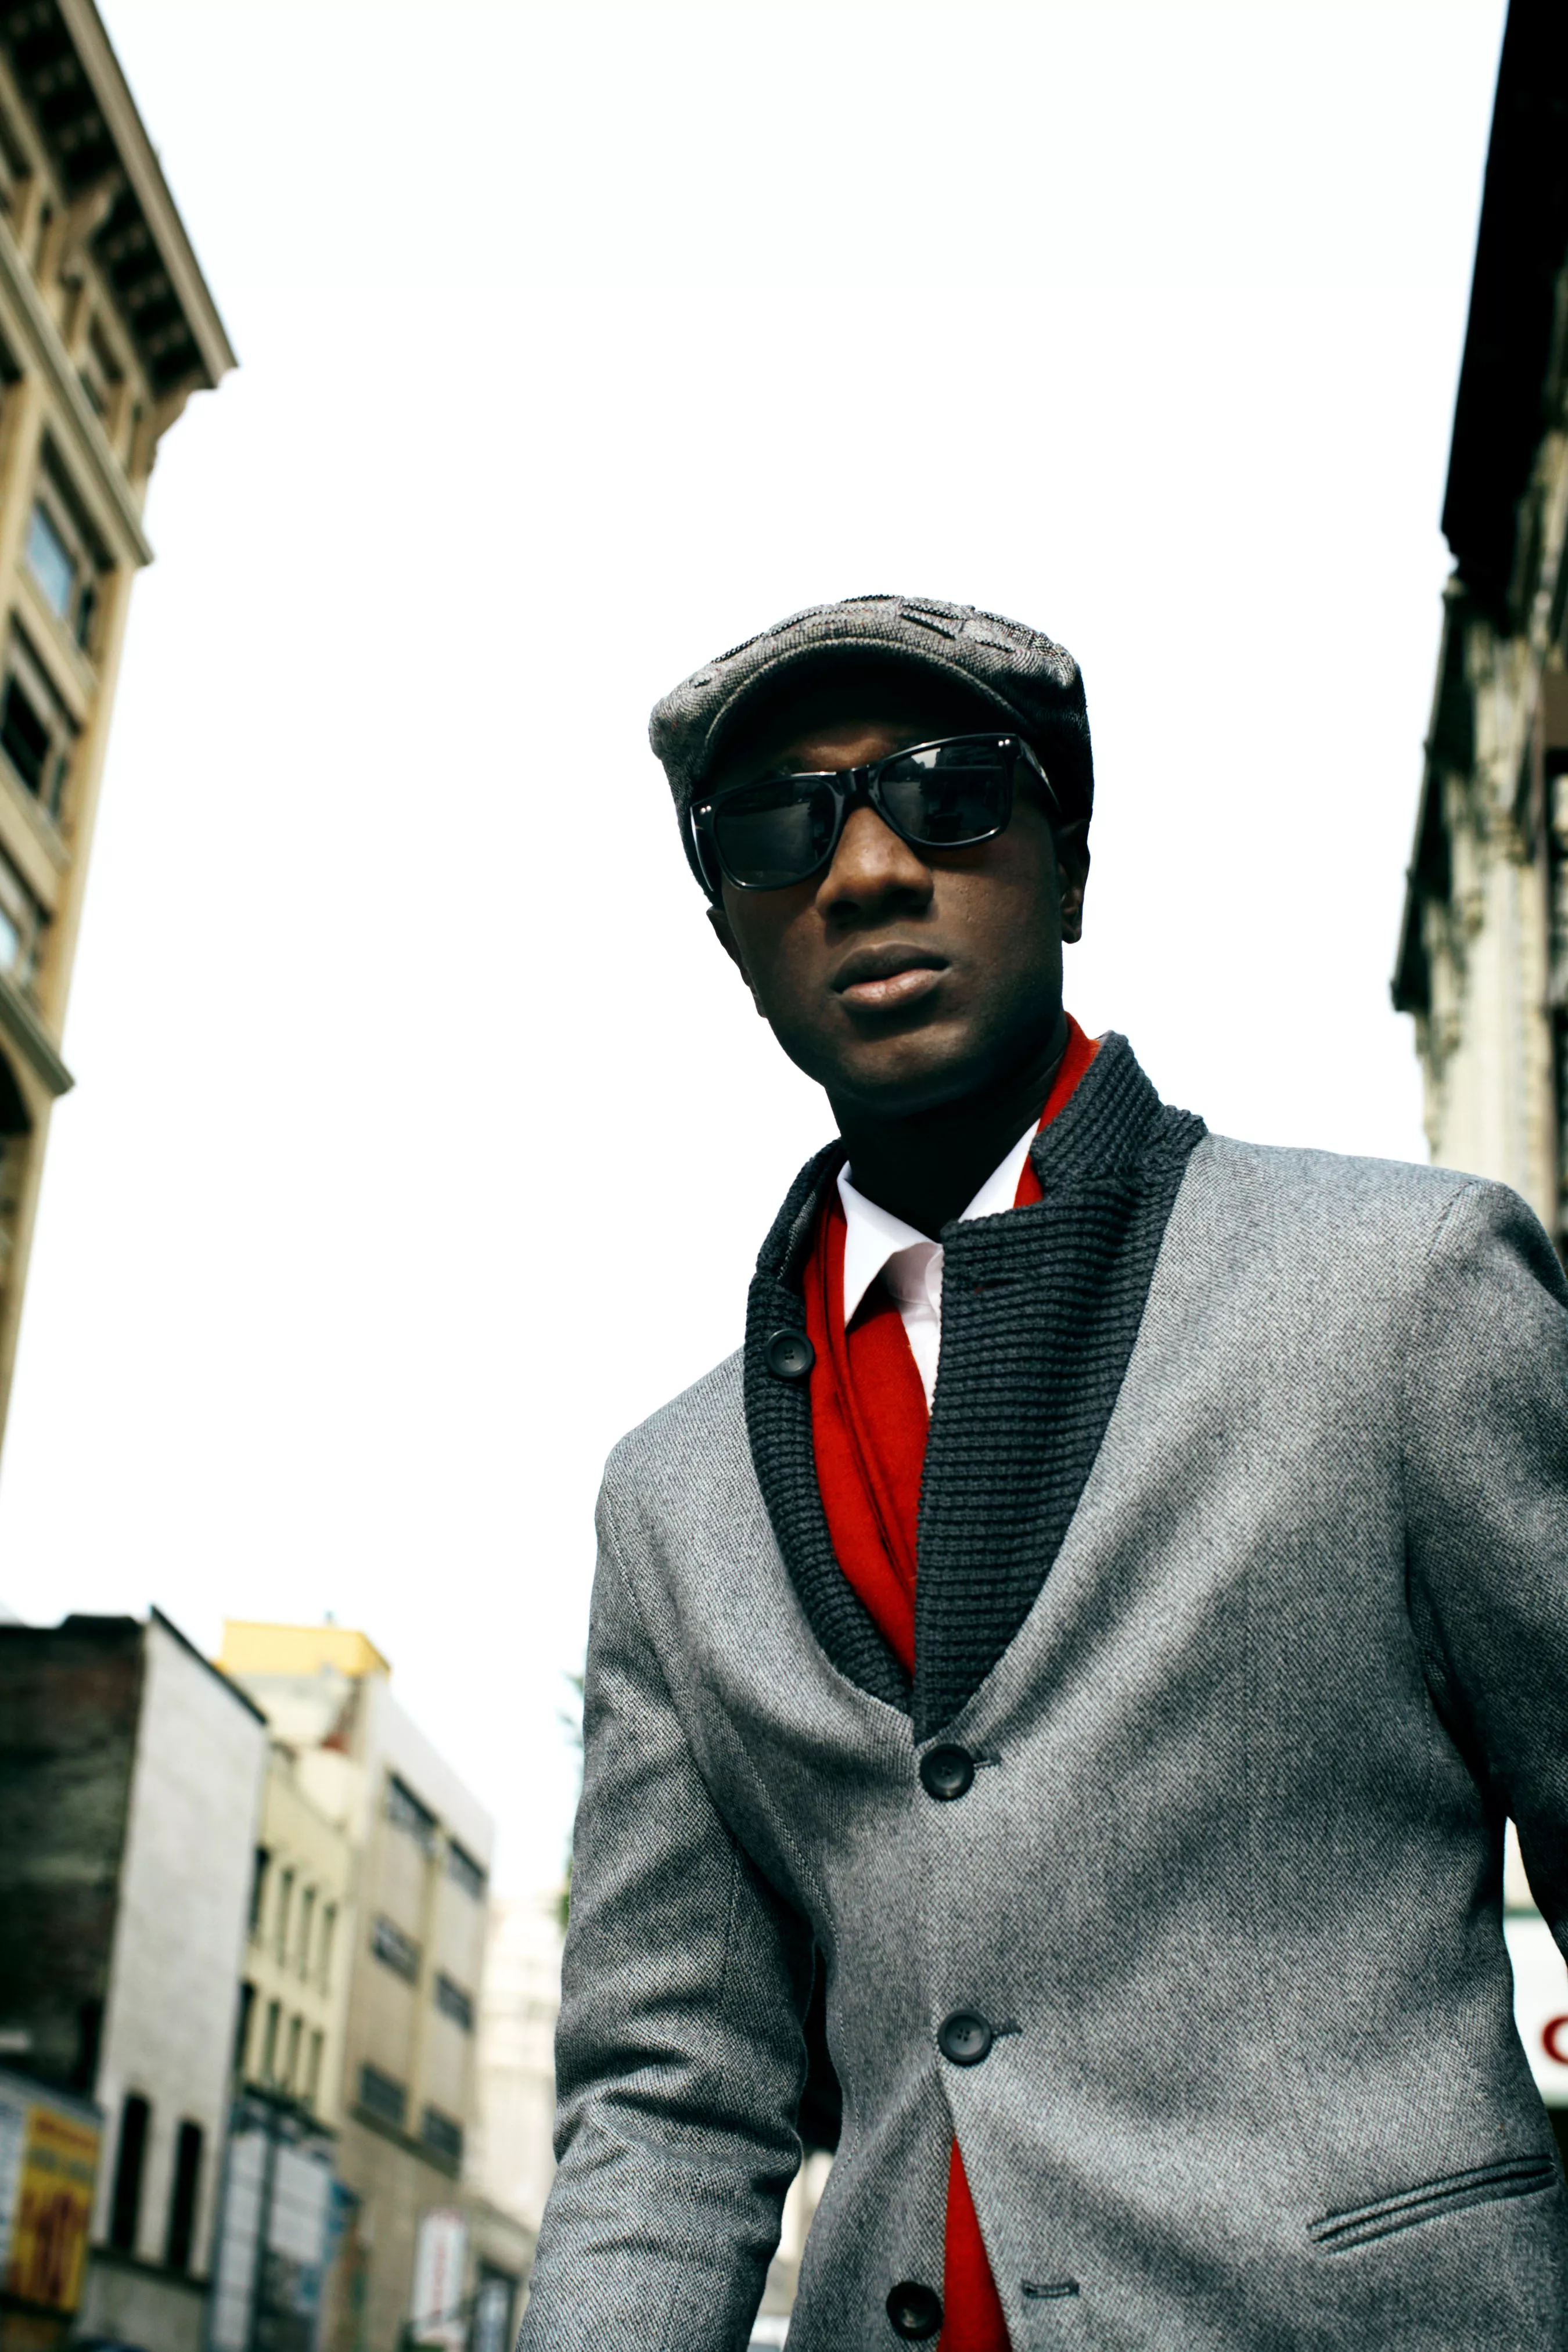 Aloe Blacc – hiphopsångare med mycket soul